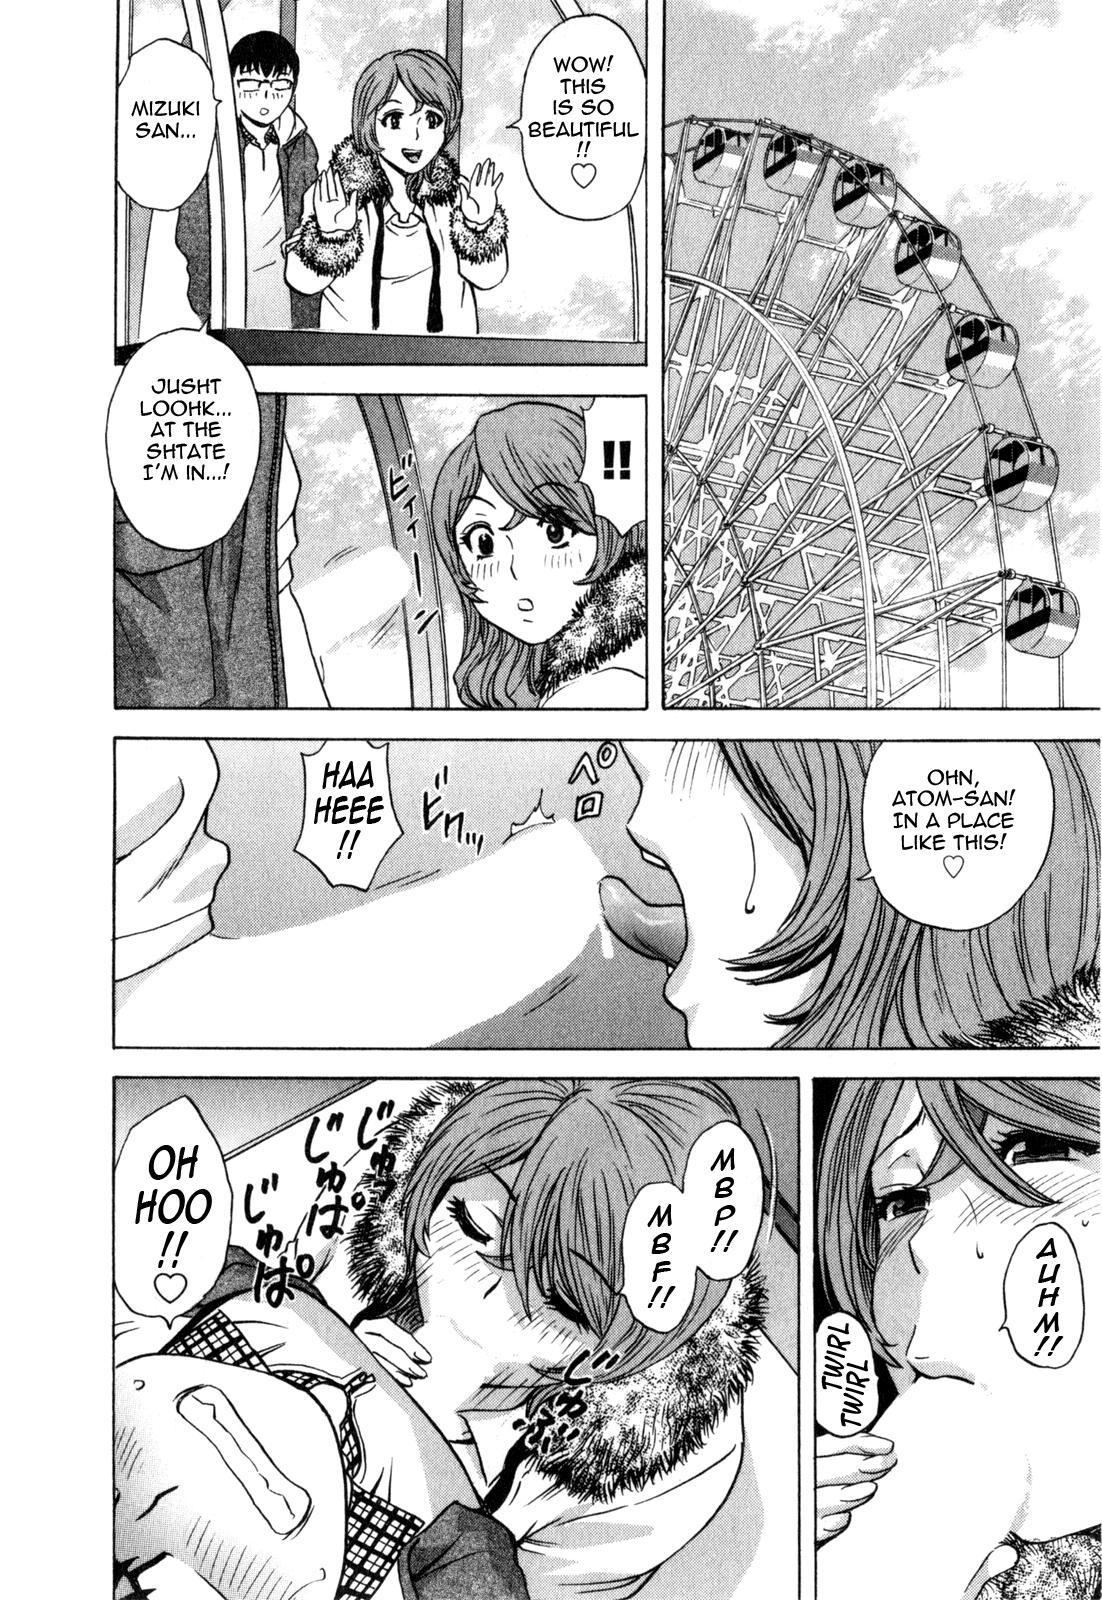 [Hidemaru] Life with Married Women Just Like a Manga 3 - Ch. 1-6 [English] {Tadanohito} 34